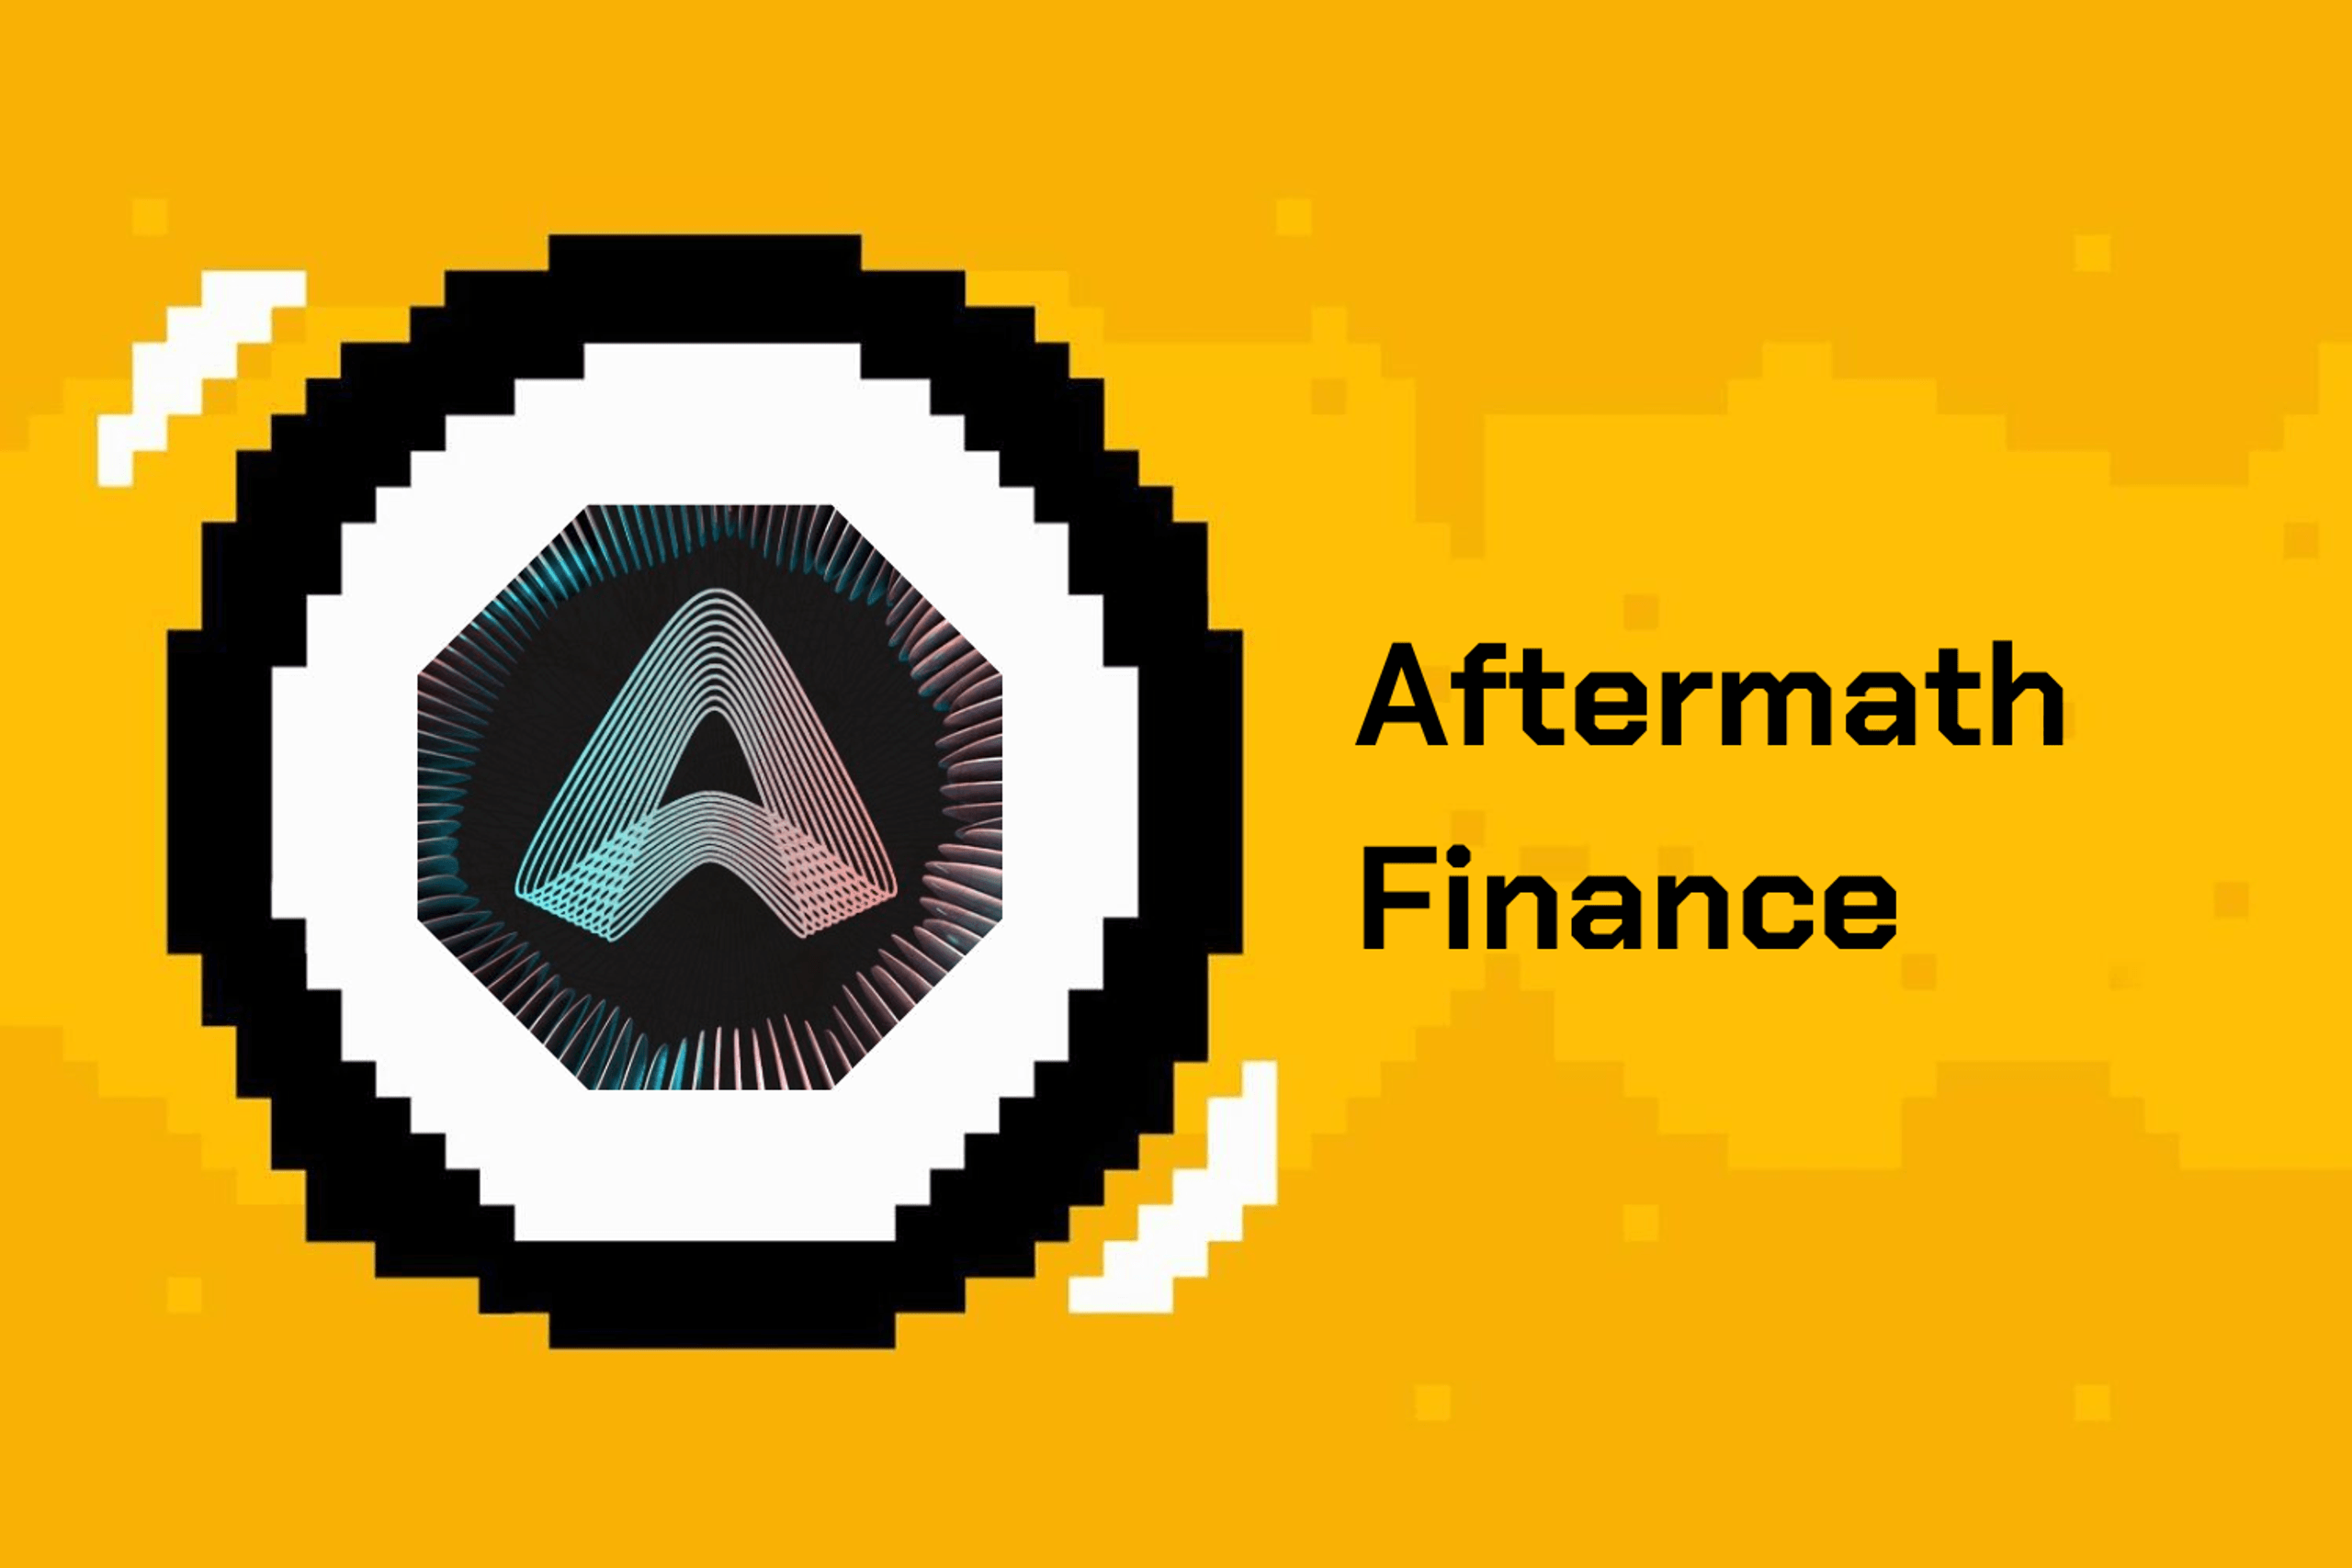 aftermath finance là gì